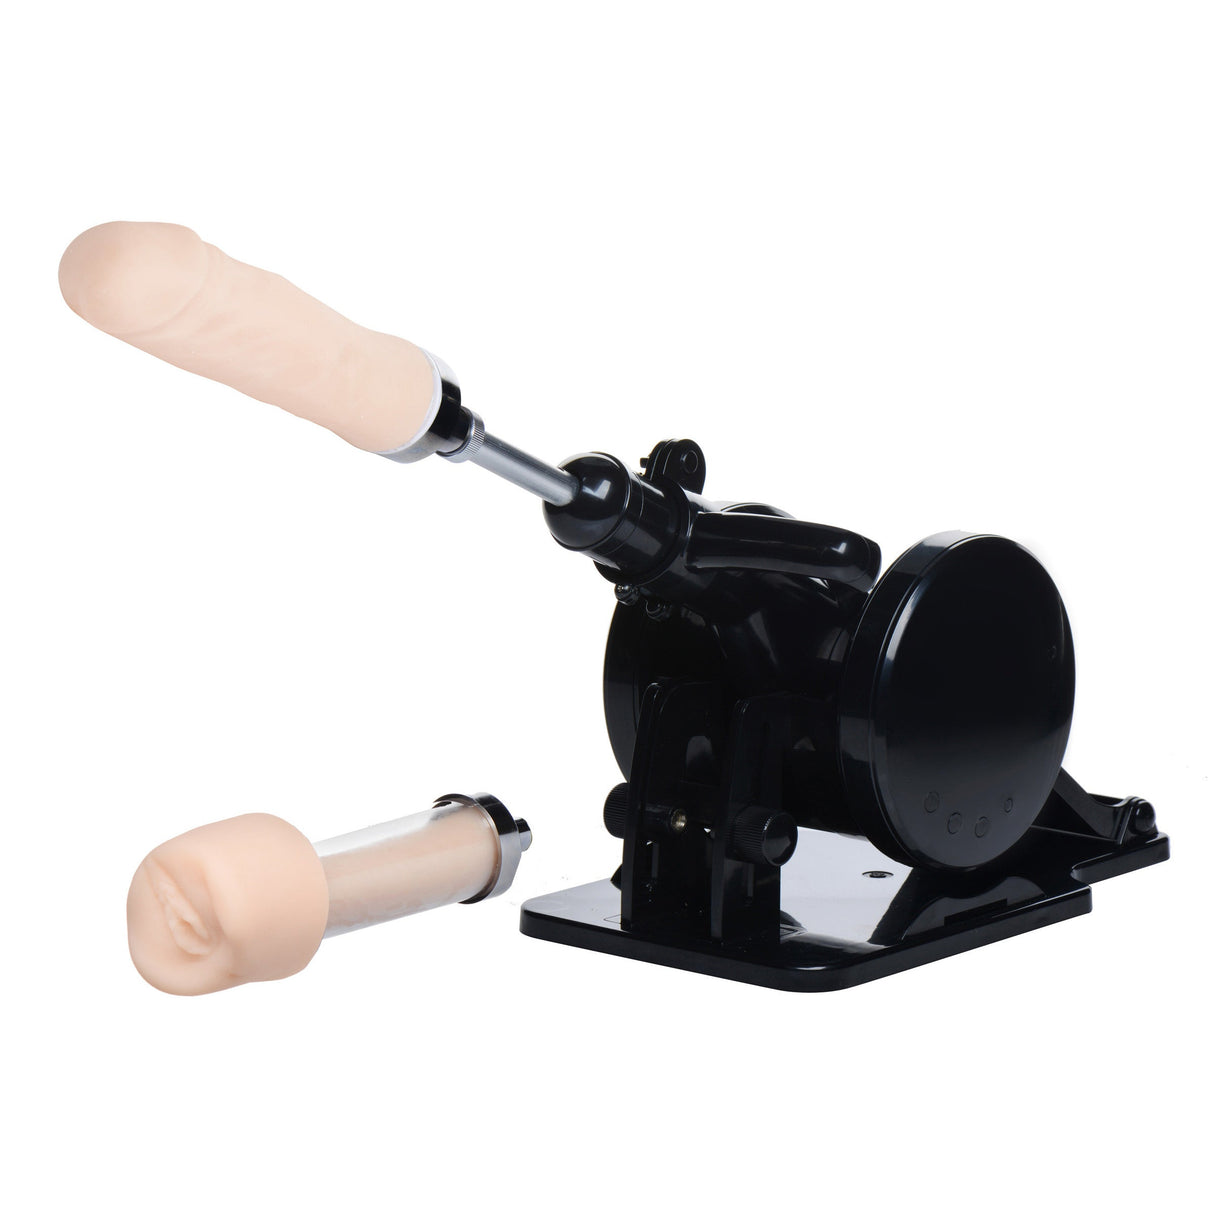 Robo FUK Adjustable and Portable Sex Machine